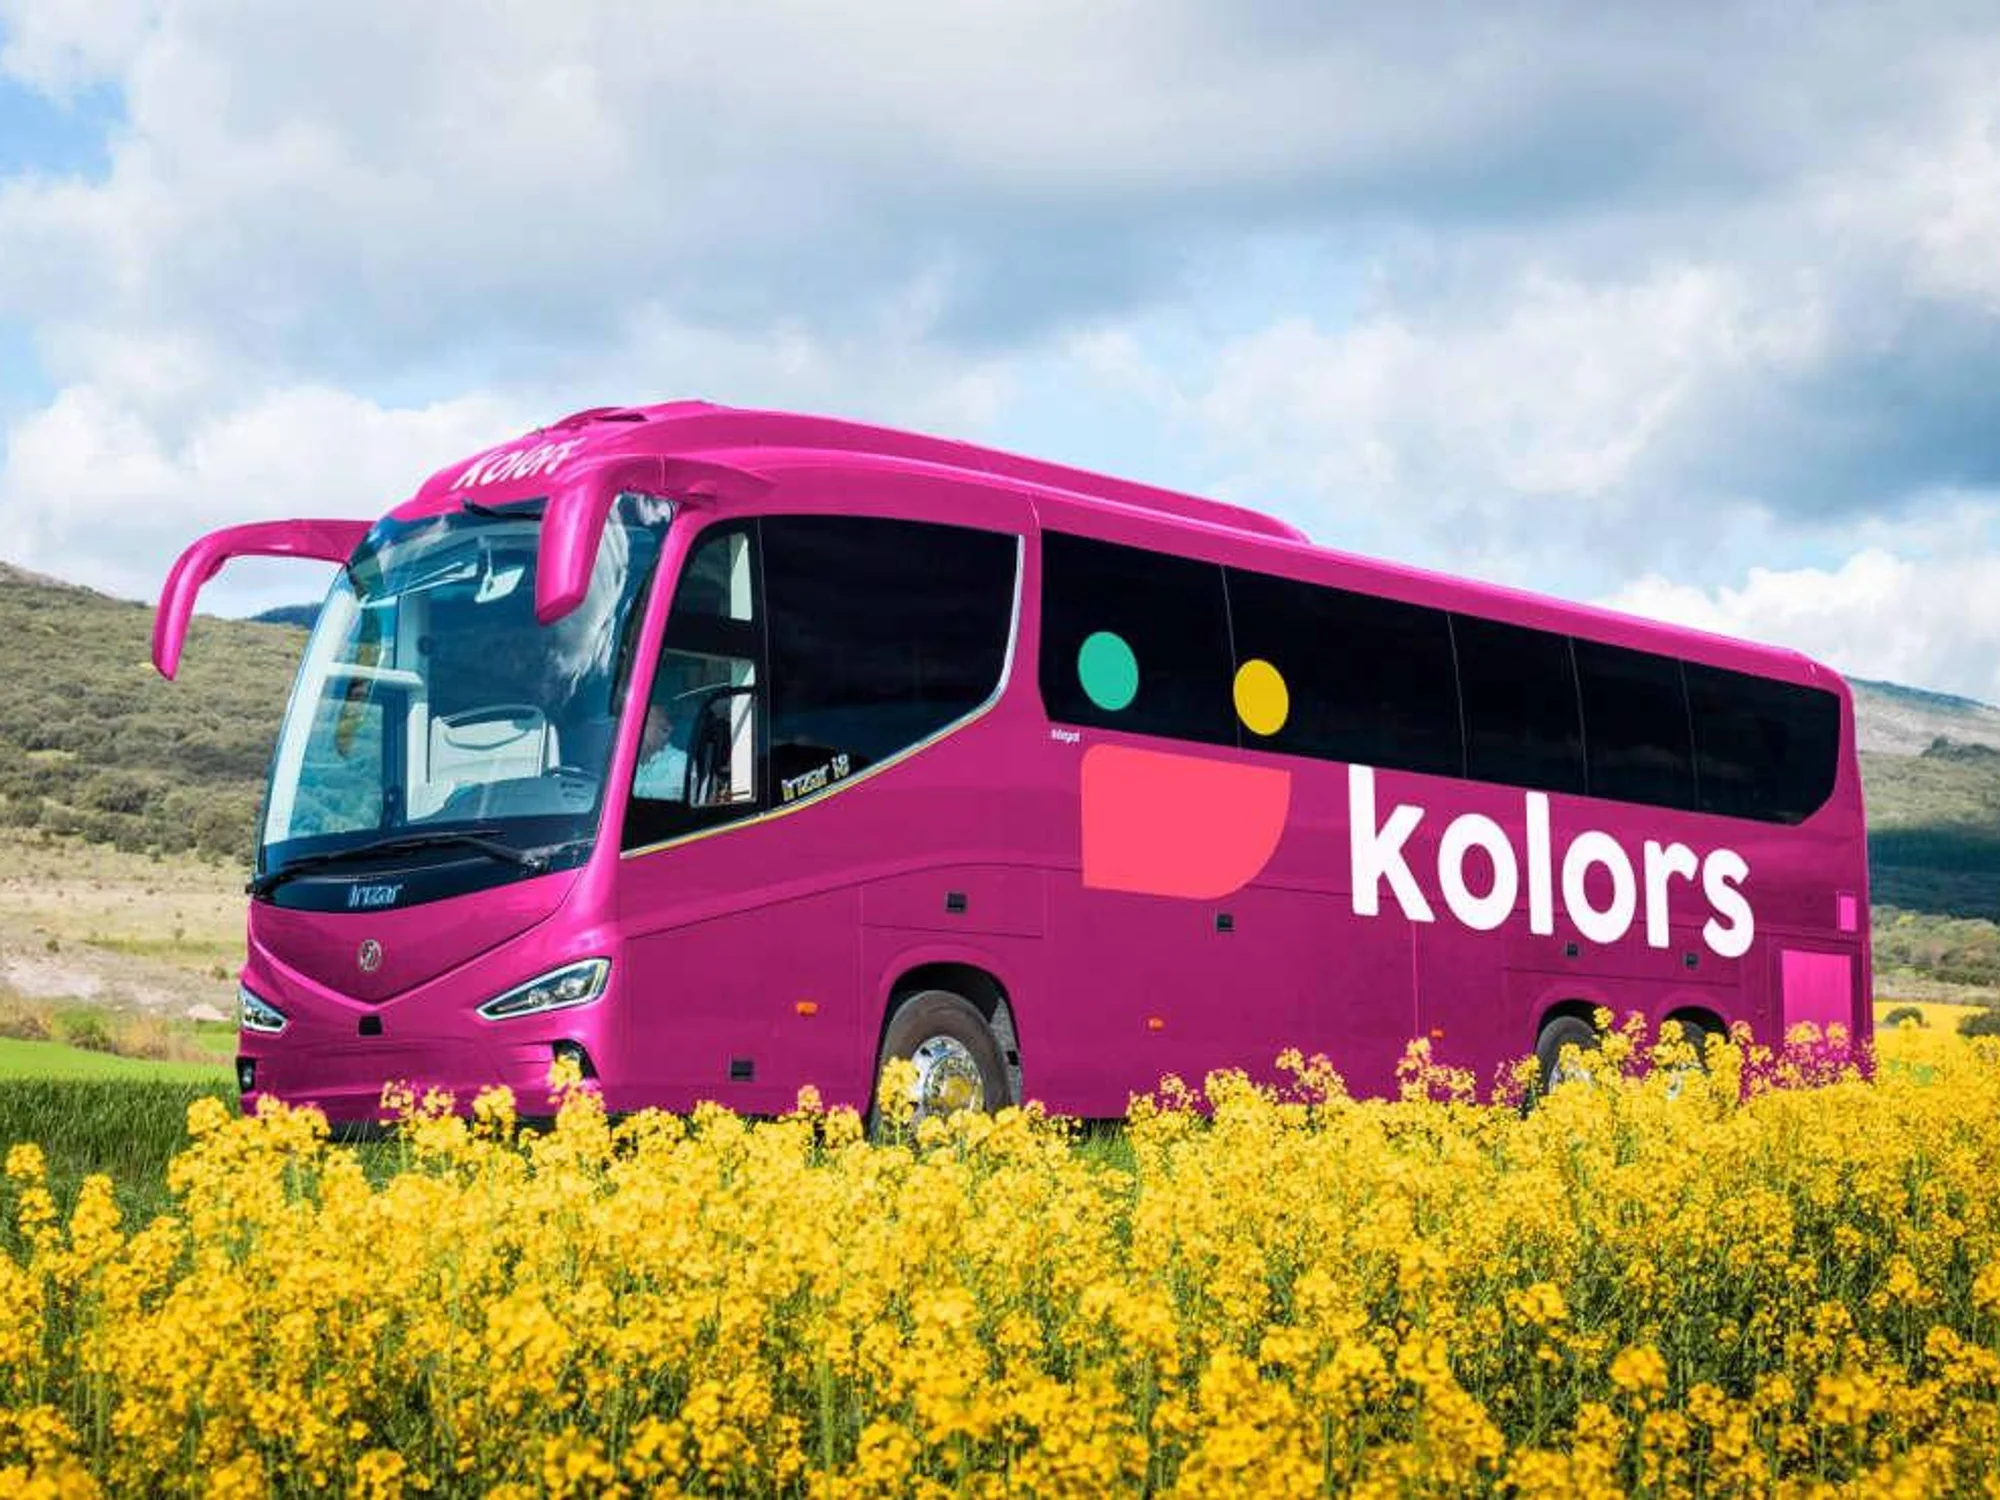 Kolors Expands Its Corporate Bus Travel Service With Acquisition Of Urbvan